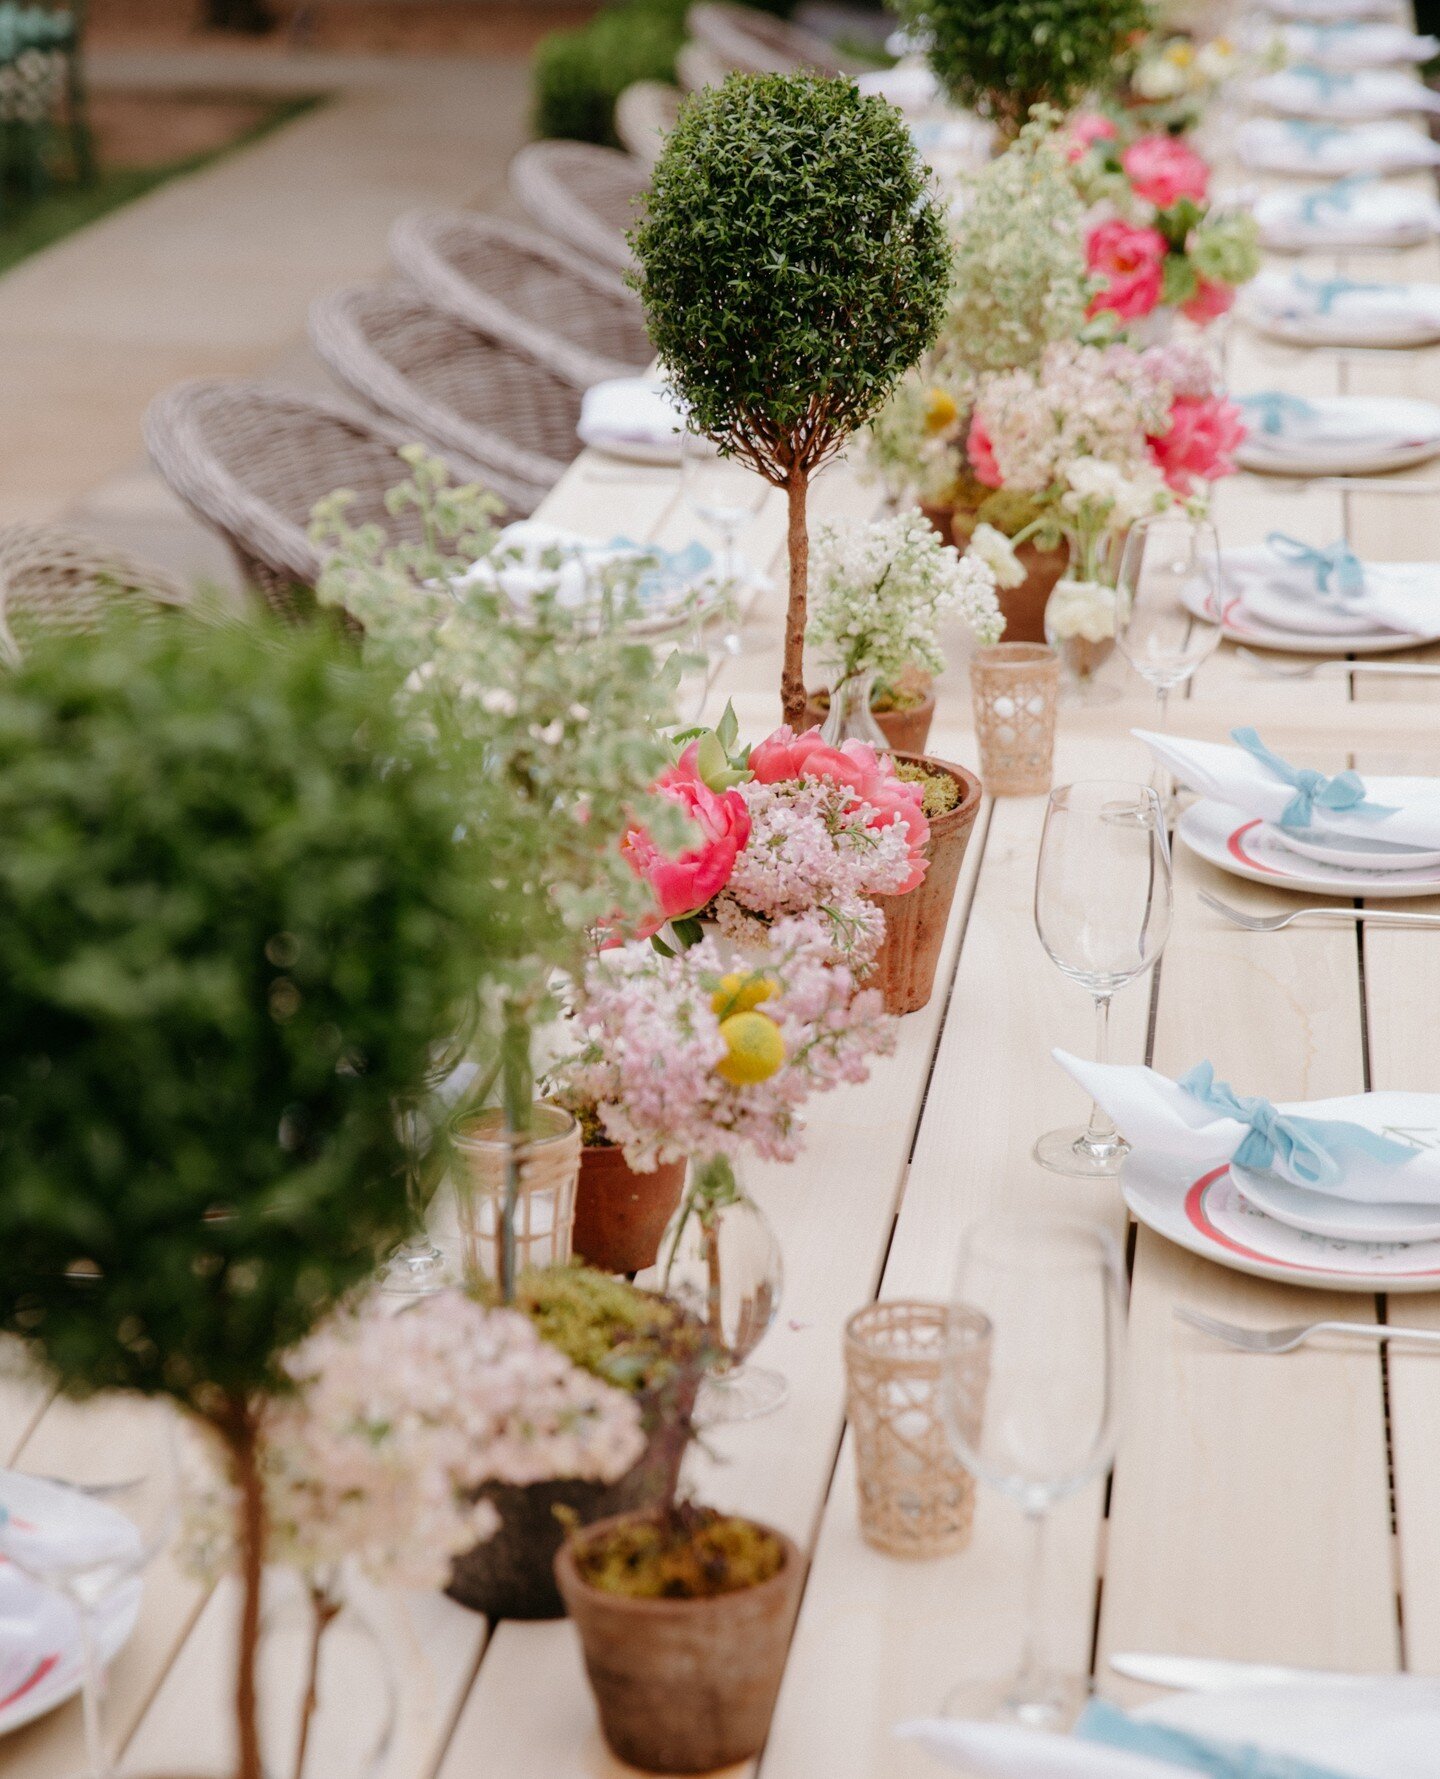 The ultimate root-to-table dinner. ⁠
⁠
Planning and Design: @hollowayevents ⁠
Photography: @eloisephotography⁠
Florals: @eventsinbloomhouston⁠
Venue: @tinyboxwoods⁠
⁠
#gardenparty #gardenwedding #weddingplanning #weddinginspo